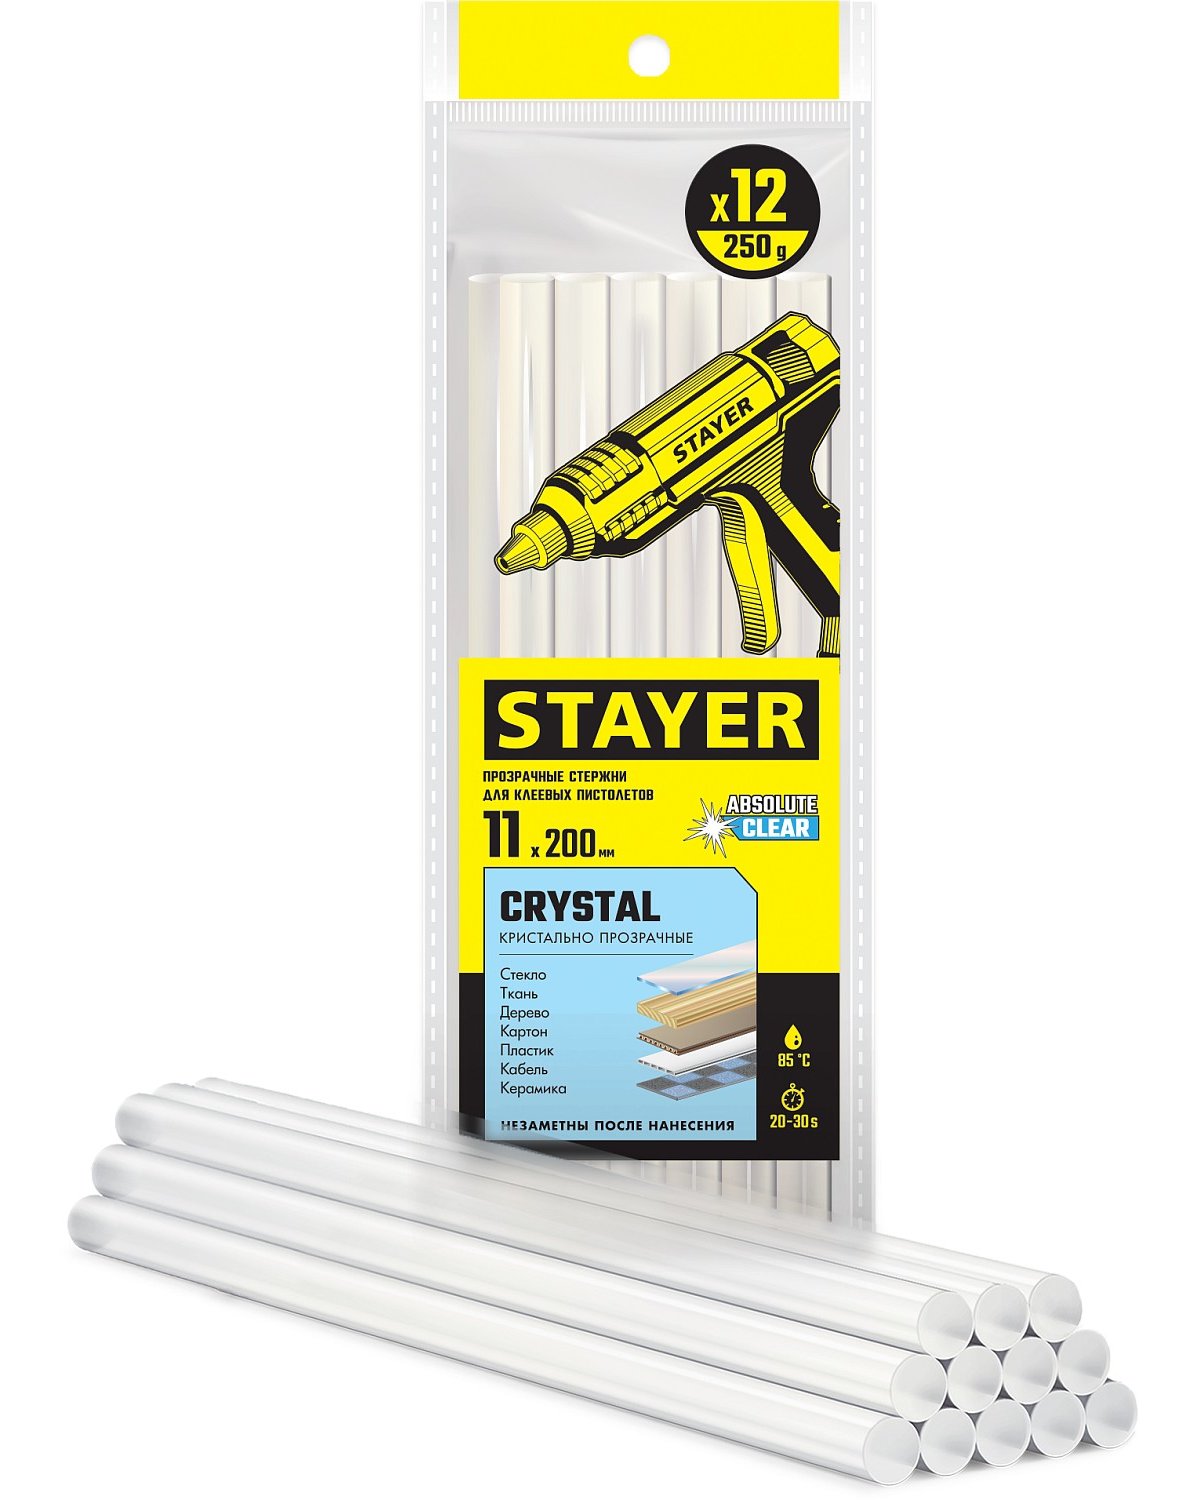    STAYER Cristal  11200  12 . (0682-12)